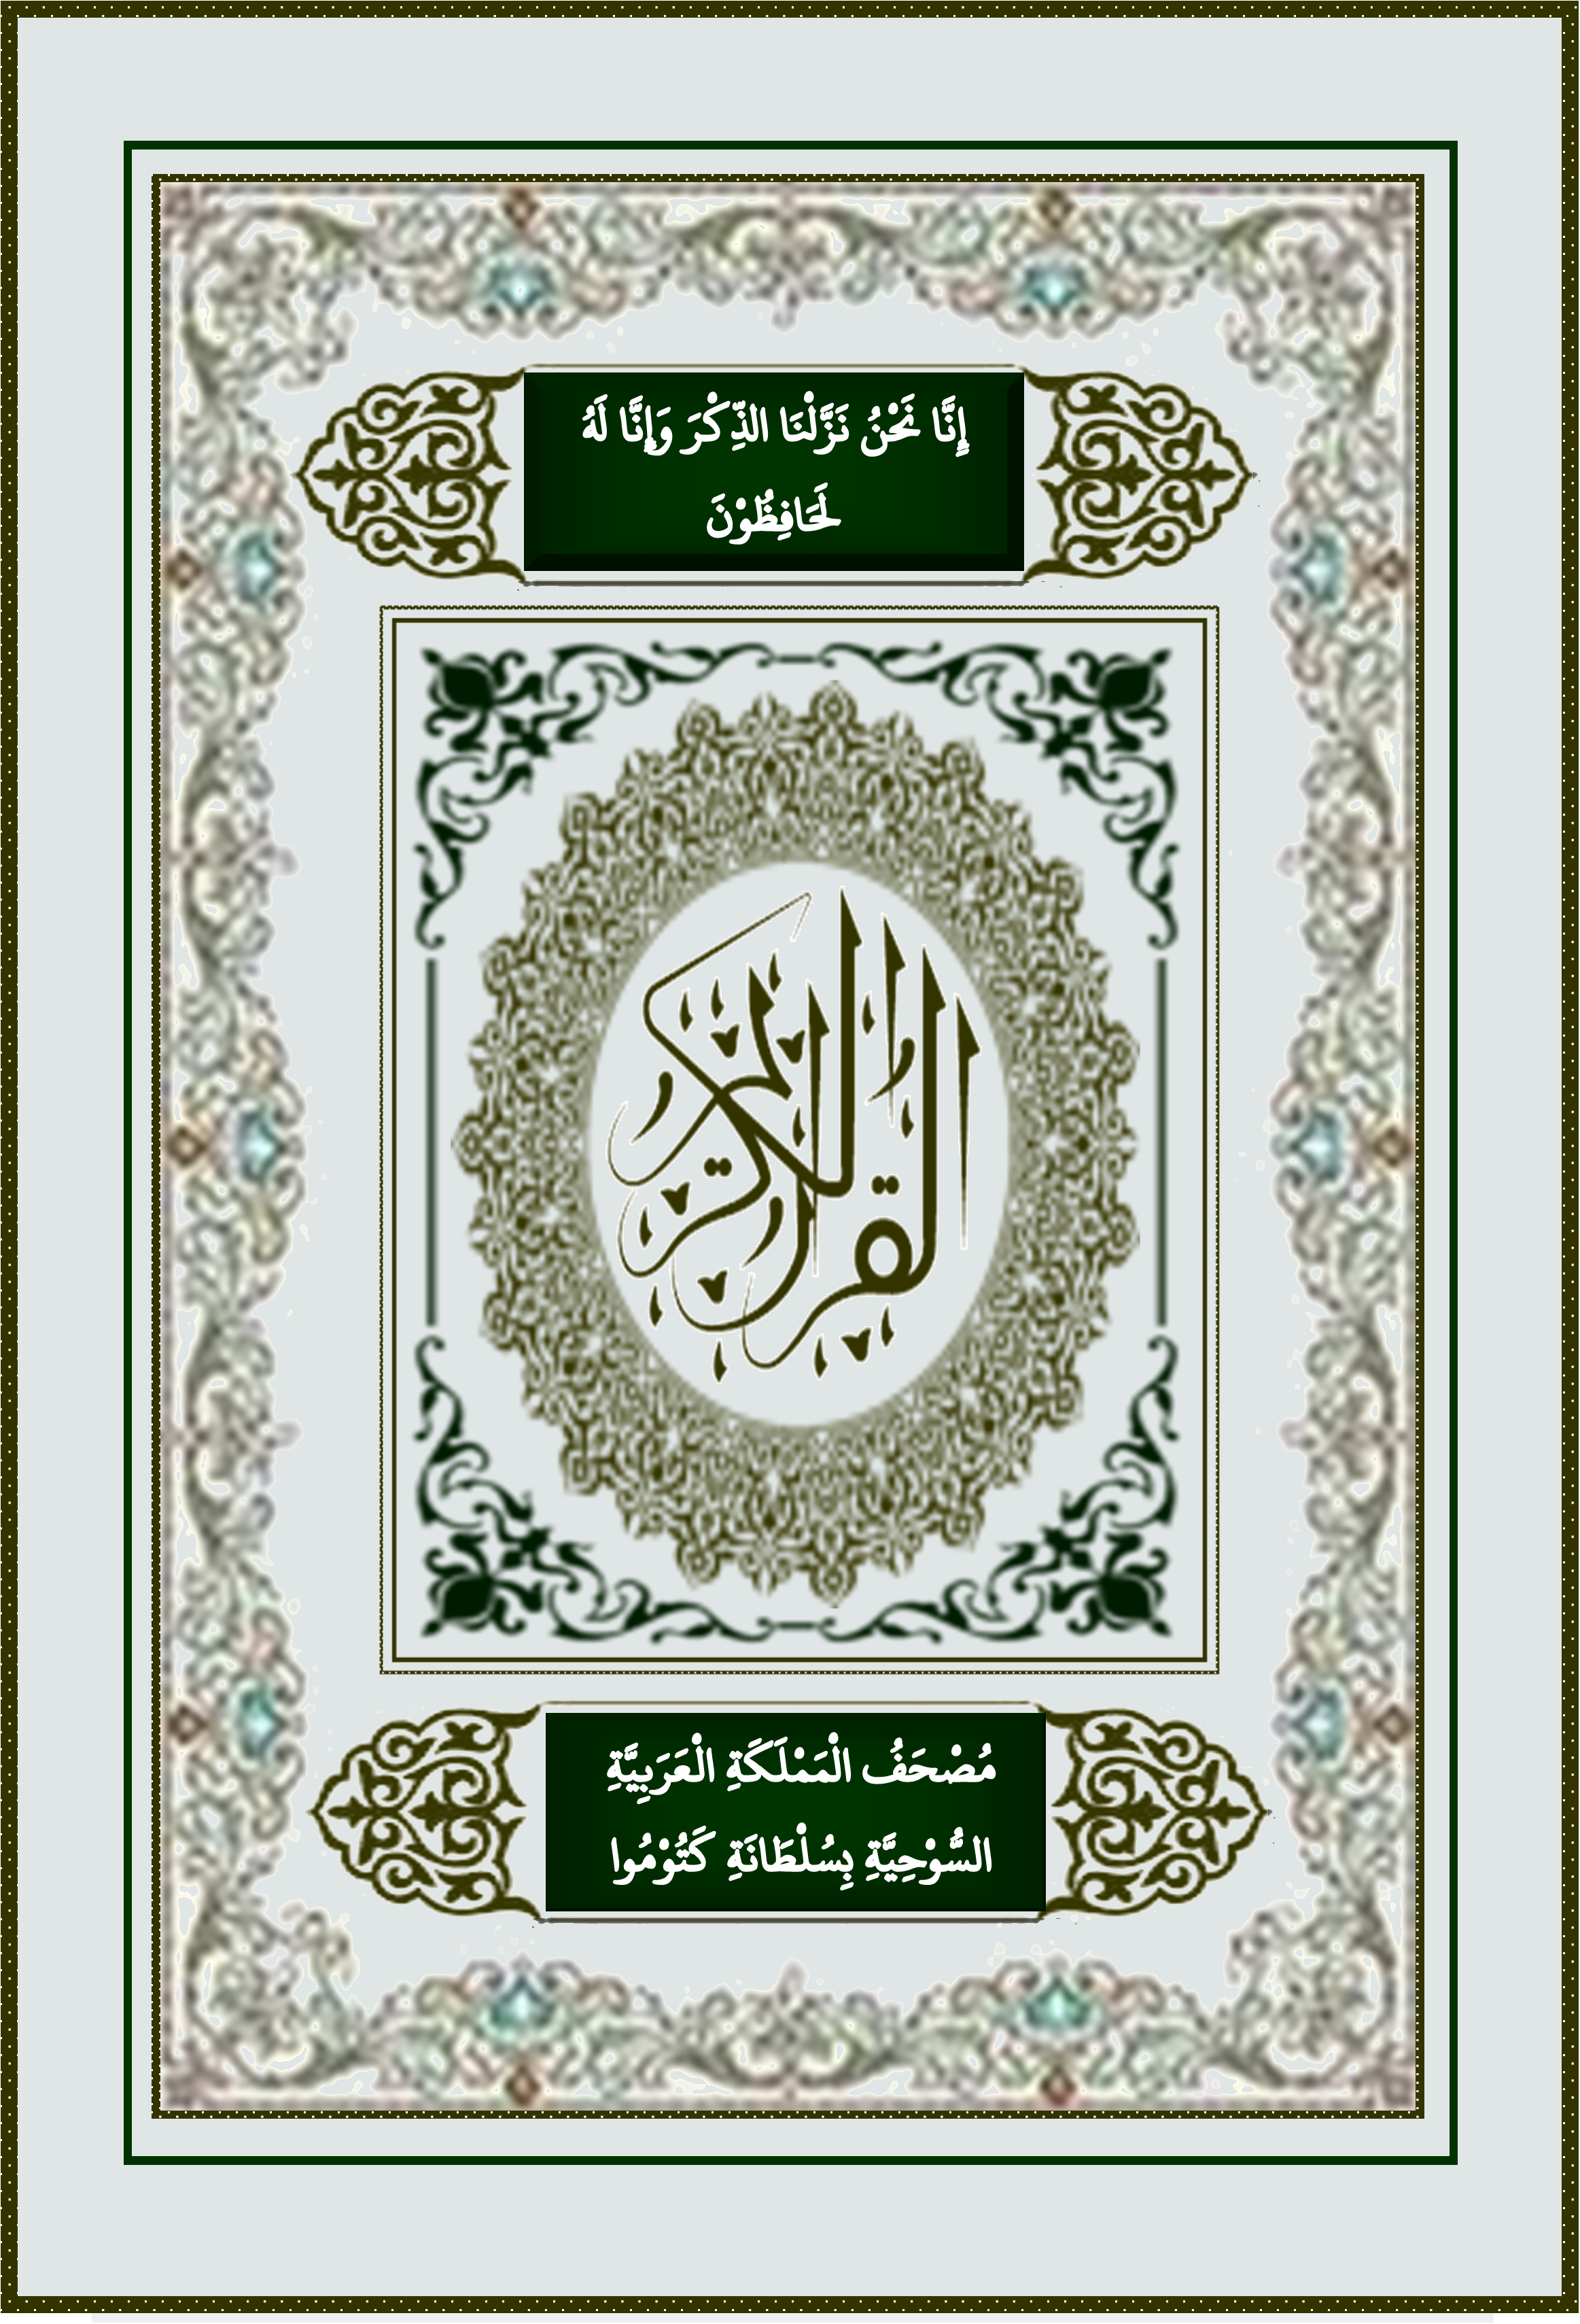 The Suuh Quran Al-Kareem